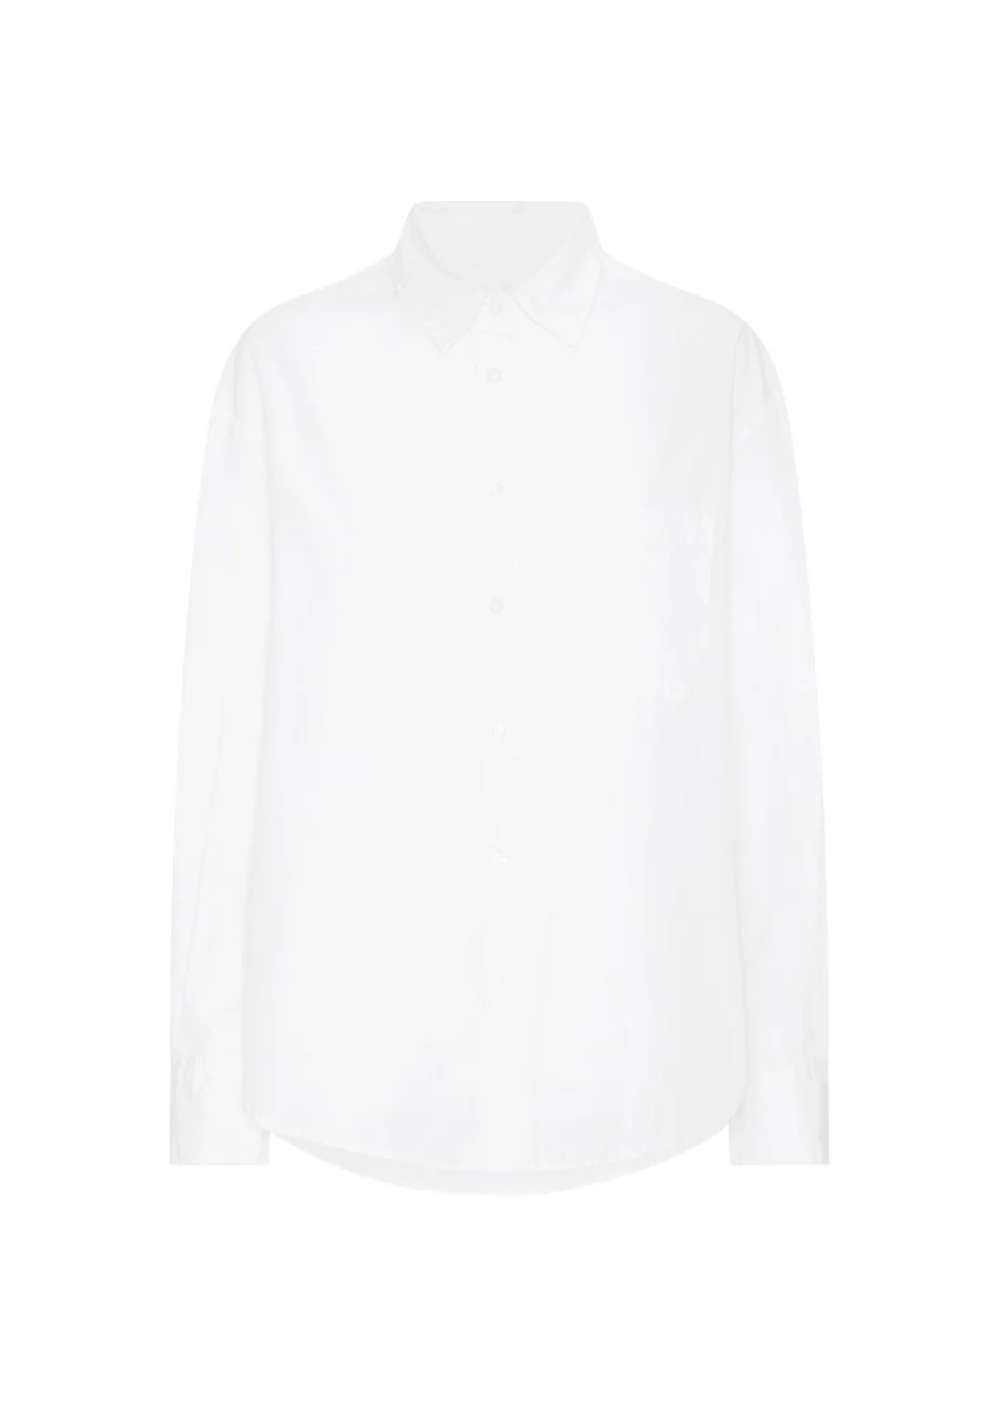 Organic Oversized Shirt - Optical White - Colorful Standard - Danali - Canada